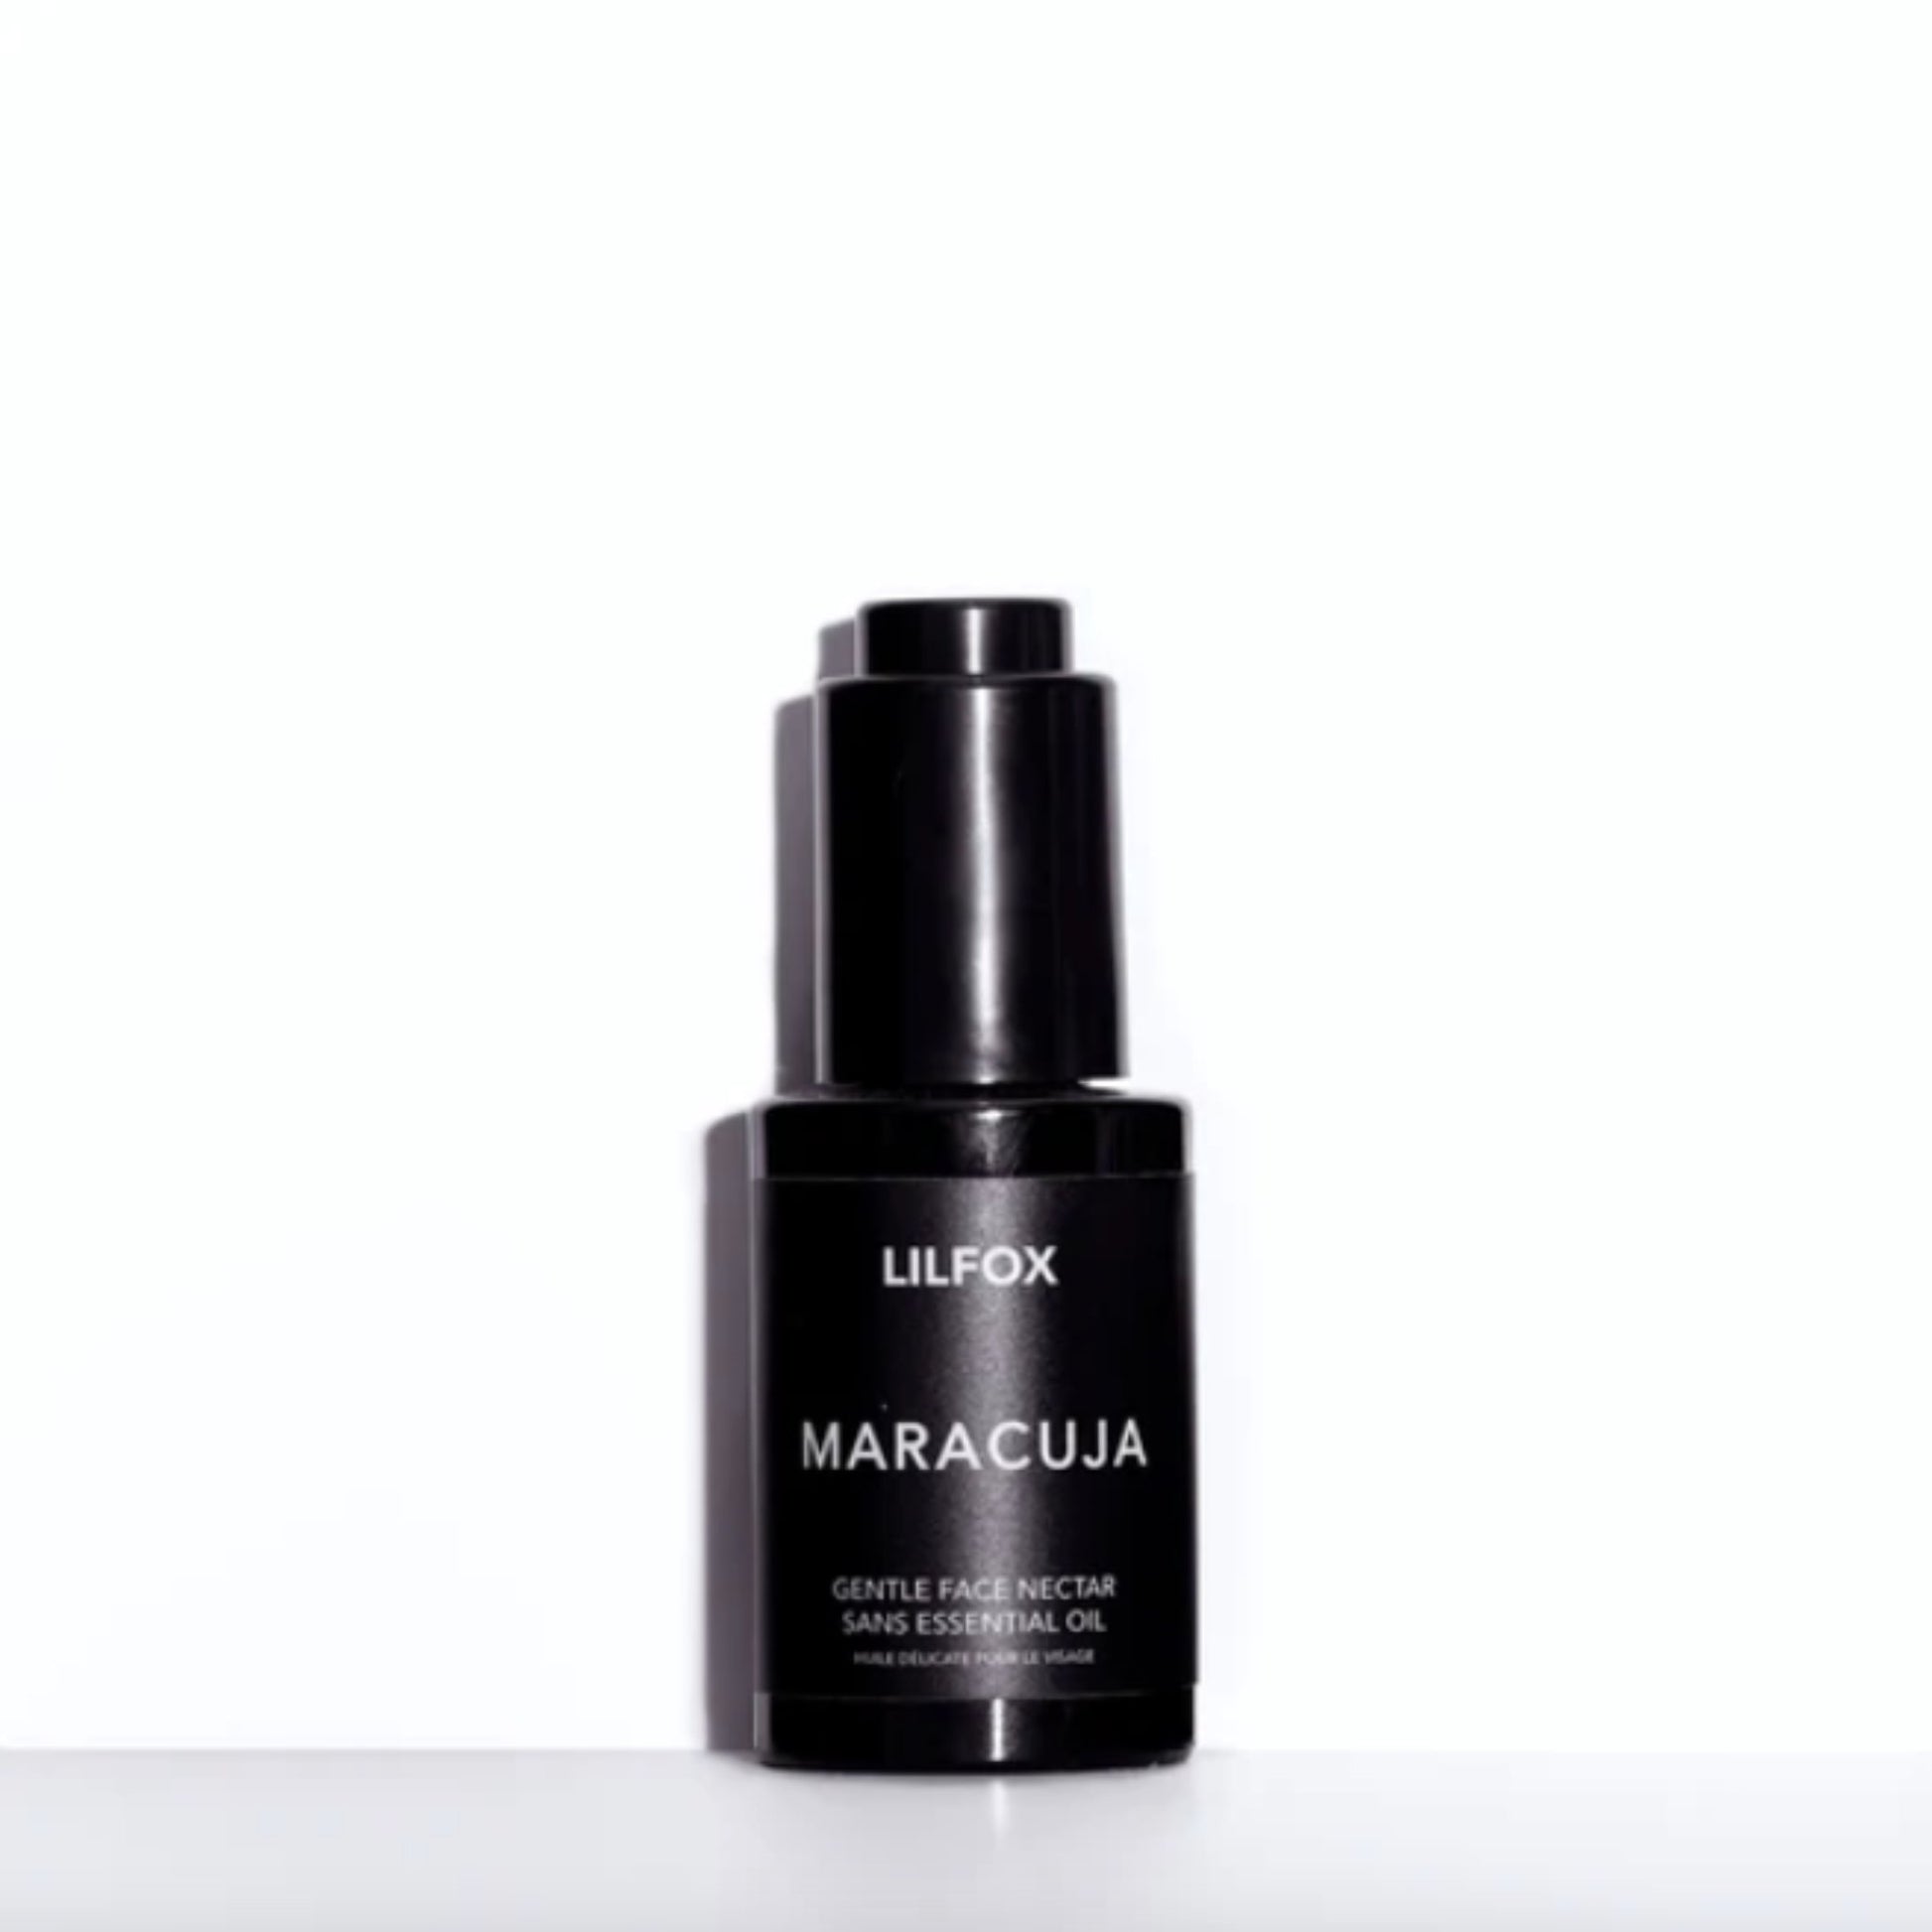 Lilfox - LILFOX MARACUJA FACE NECTAR | Gentle EO Free - ORESTA clean beauty simplified